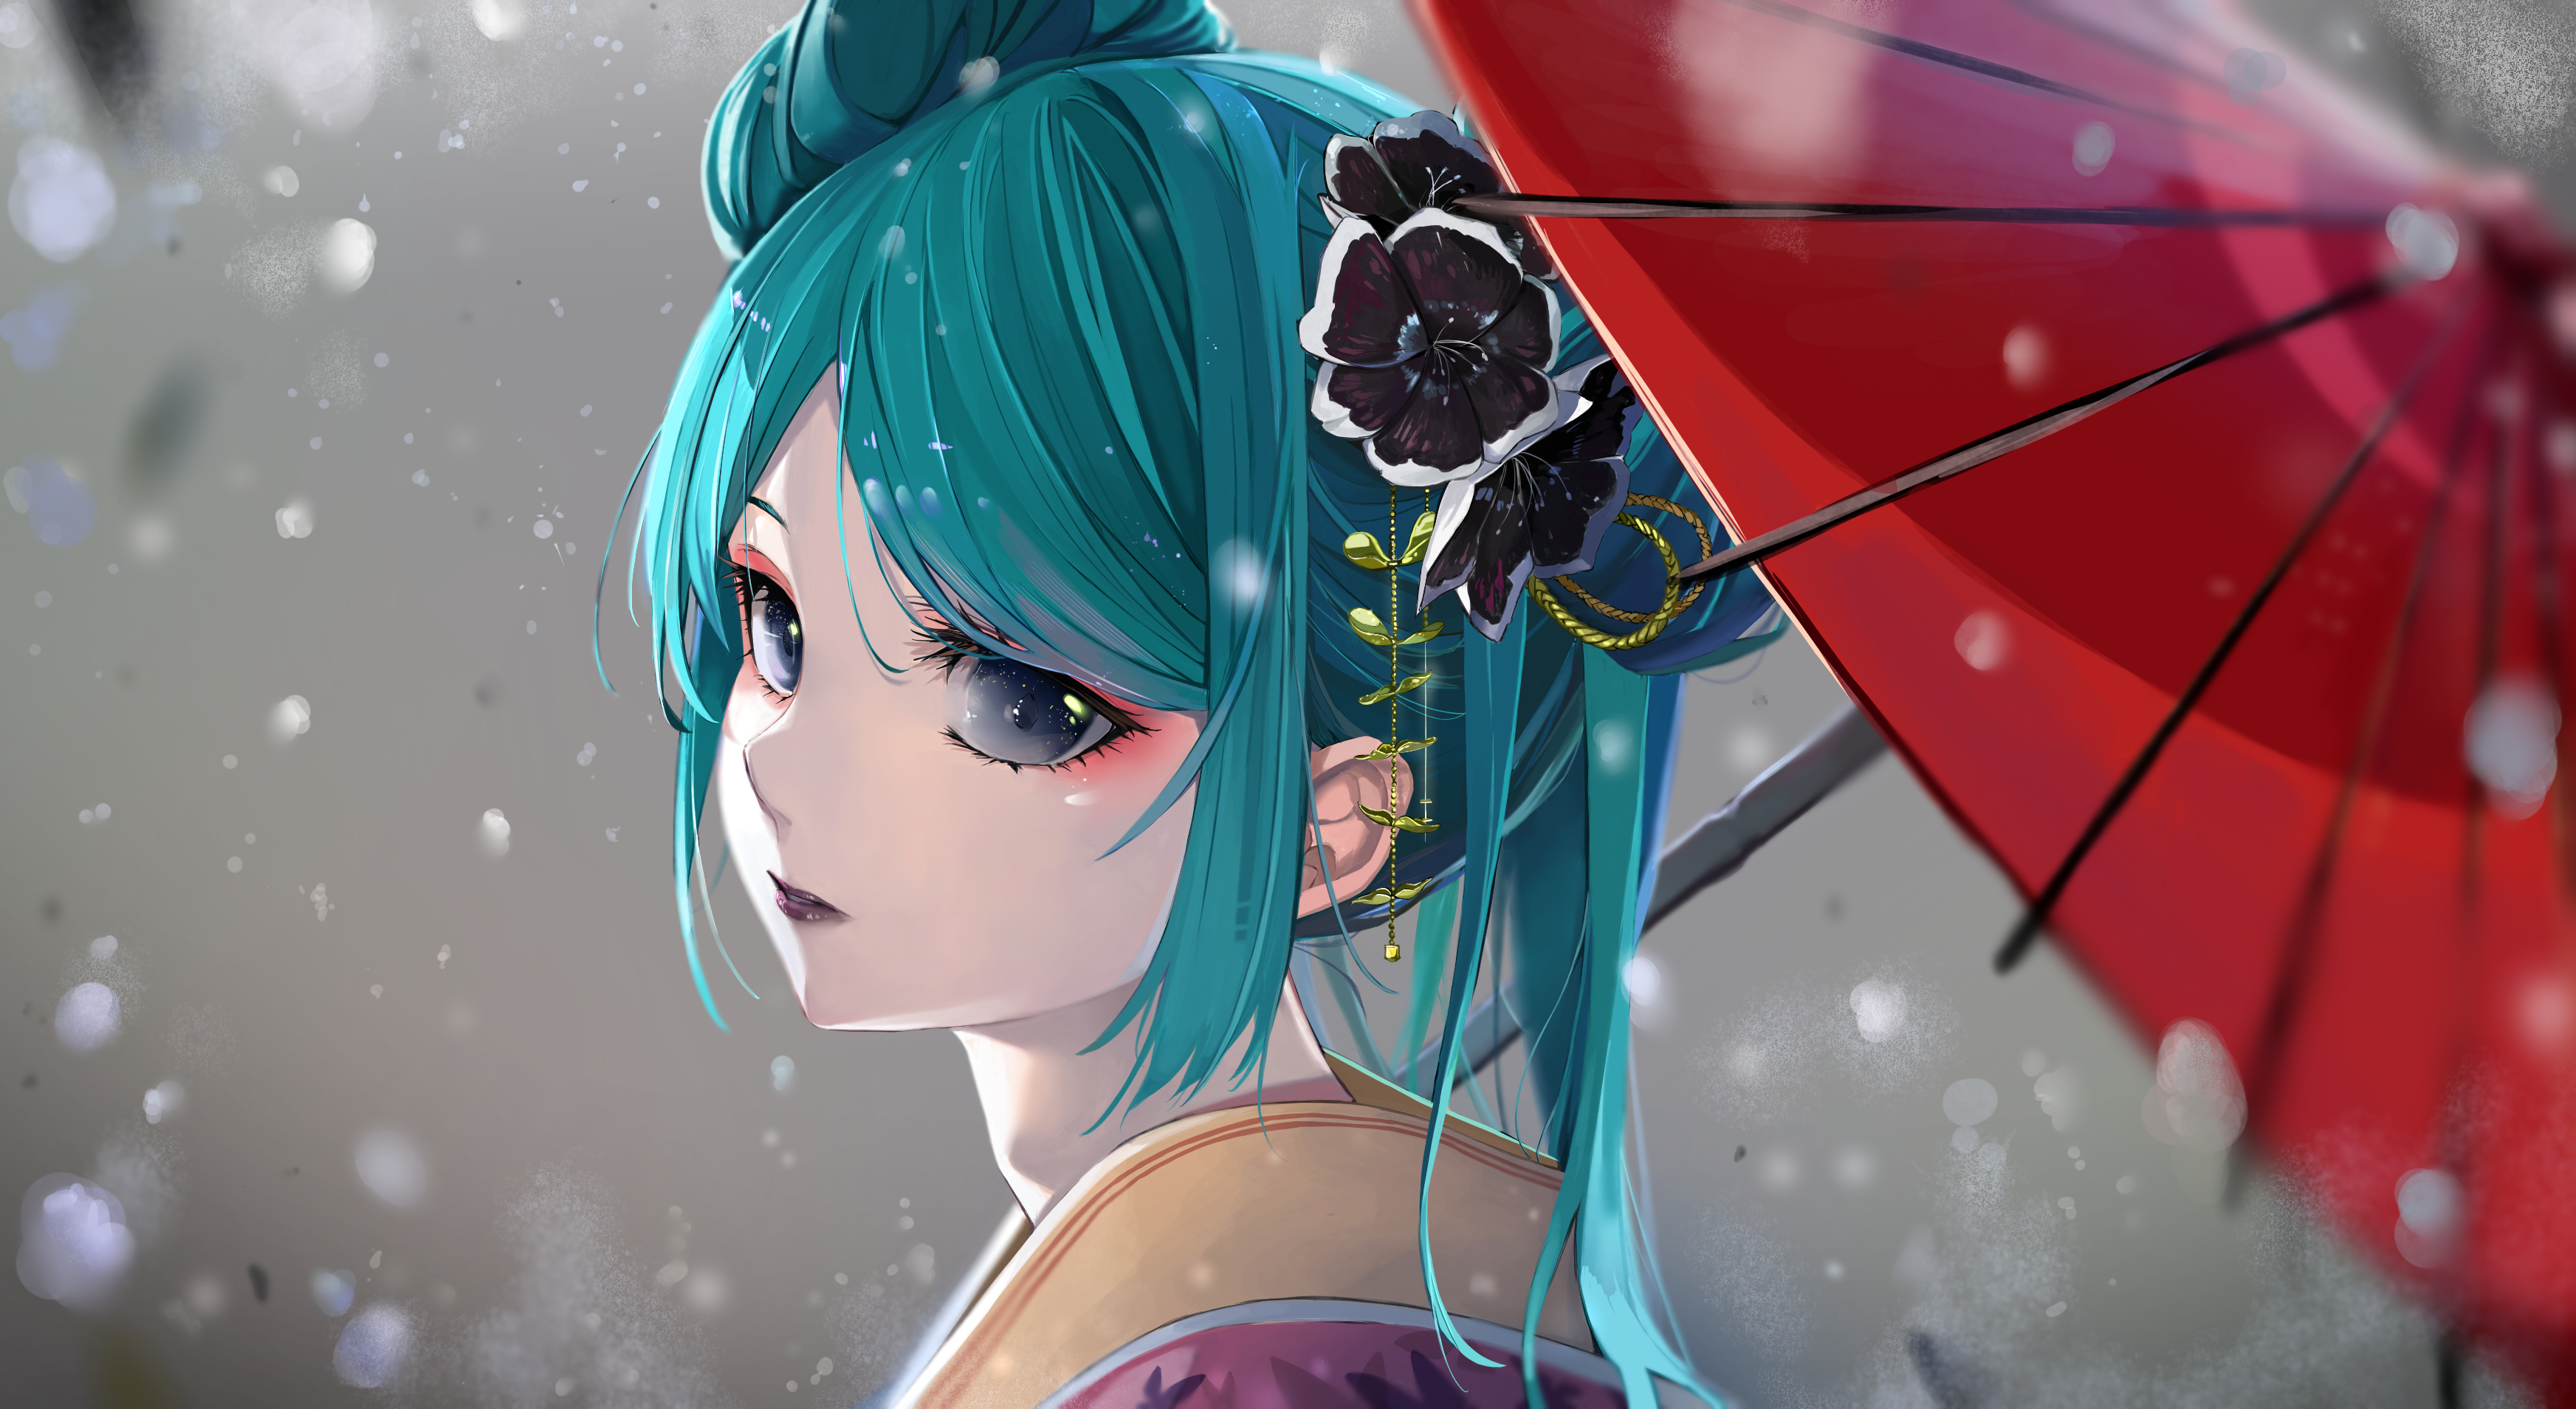 Anime 3489x1909 anime anime girls dark eyes kimono umbrella barrette long hair cyan hair Merah Drow artwork Hatsune Miku